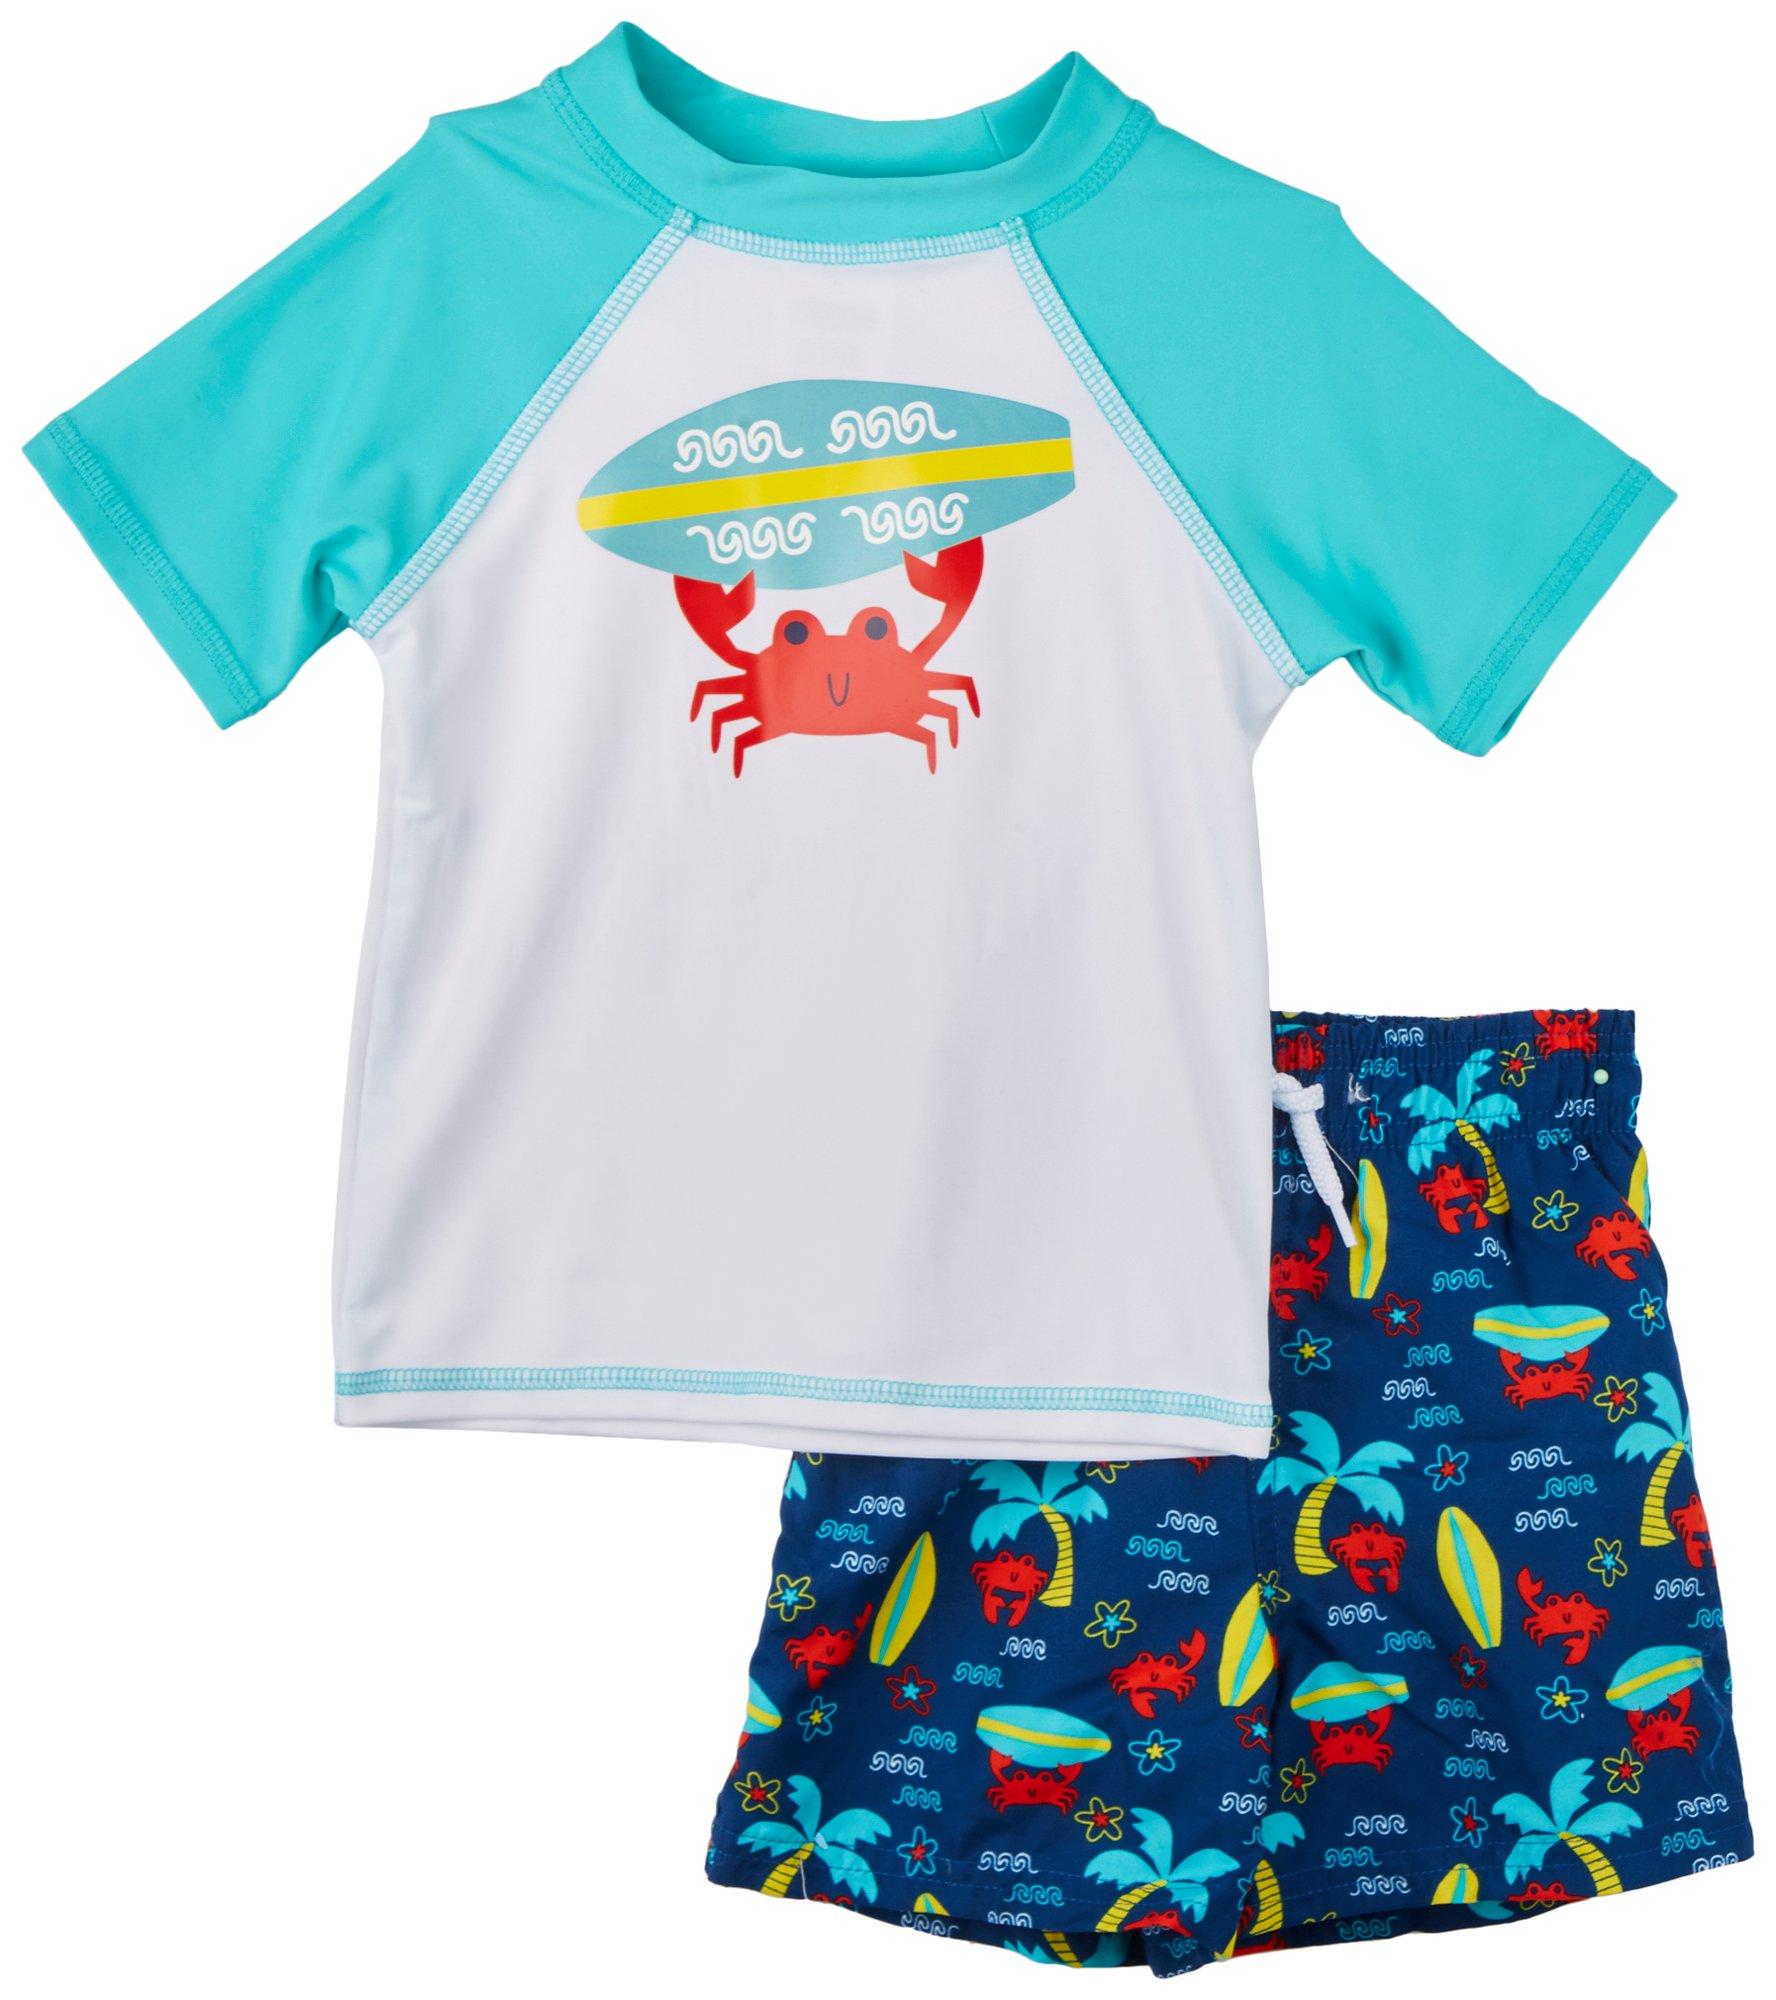 Floatimini Toddler Boys 2 Pc. Surfer Crab Swimsuit Set